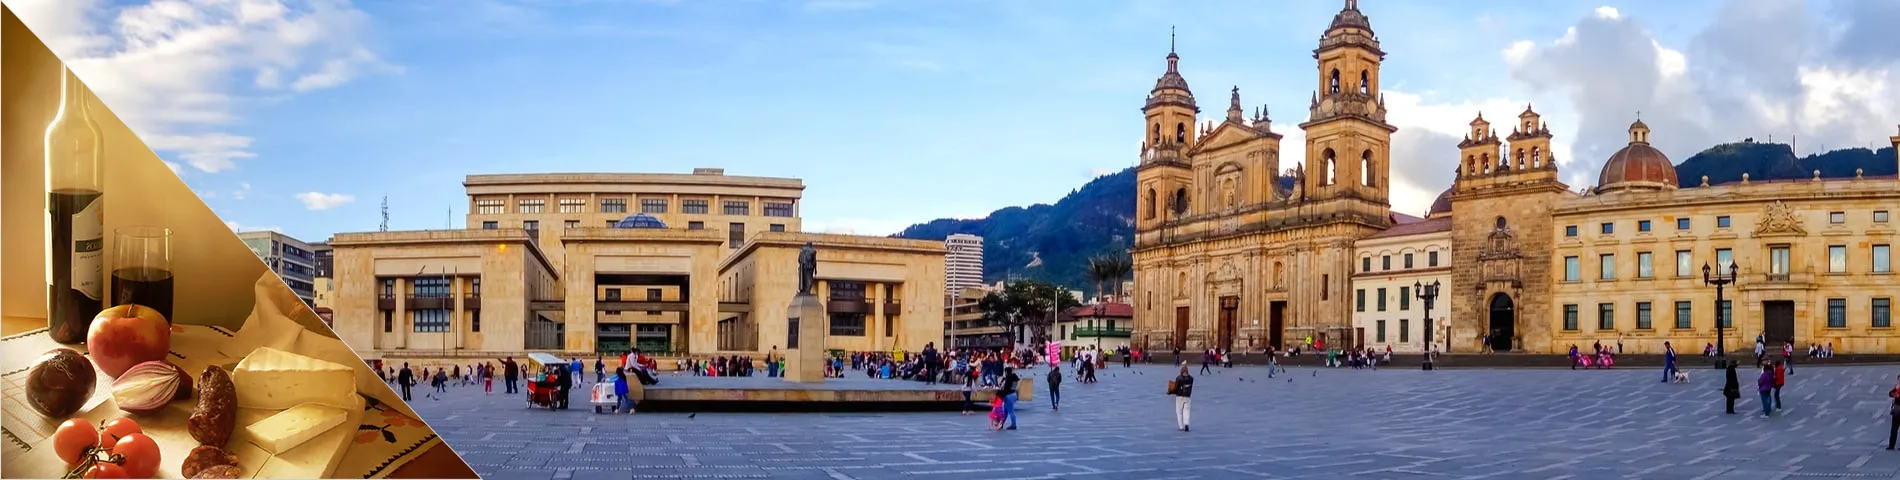 Bogota - Španielčina a kultúra